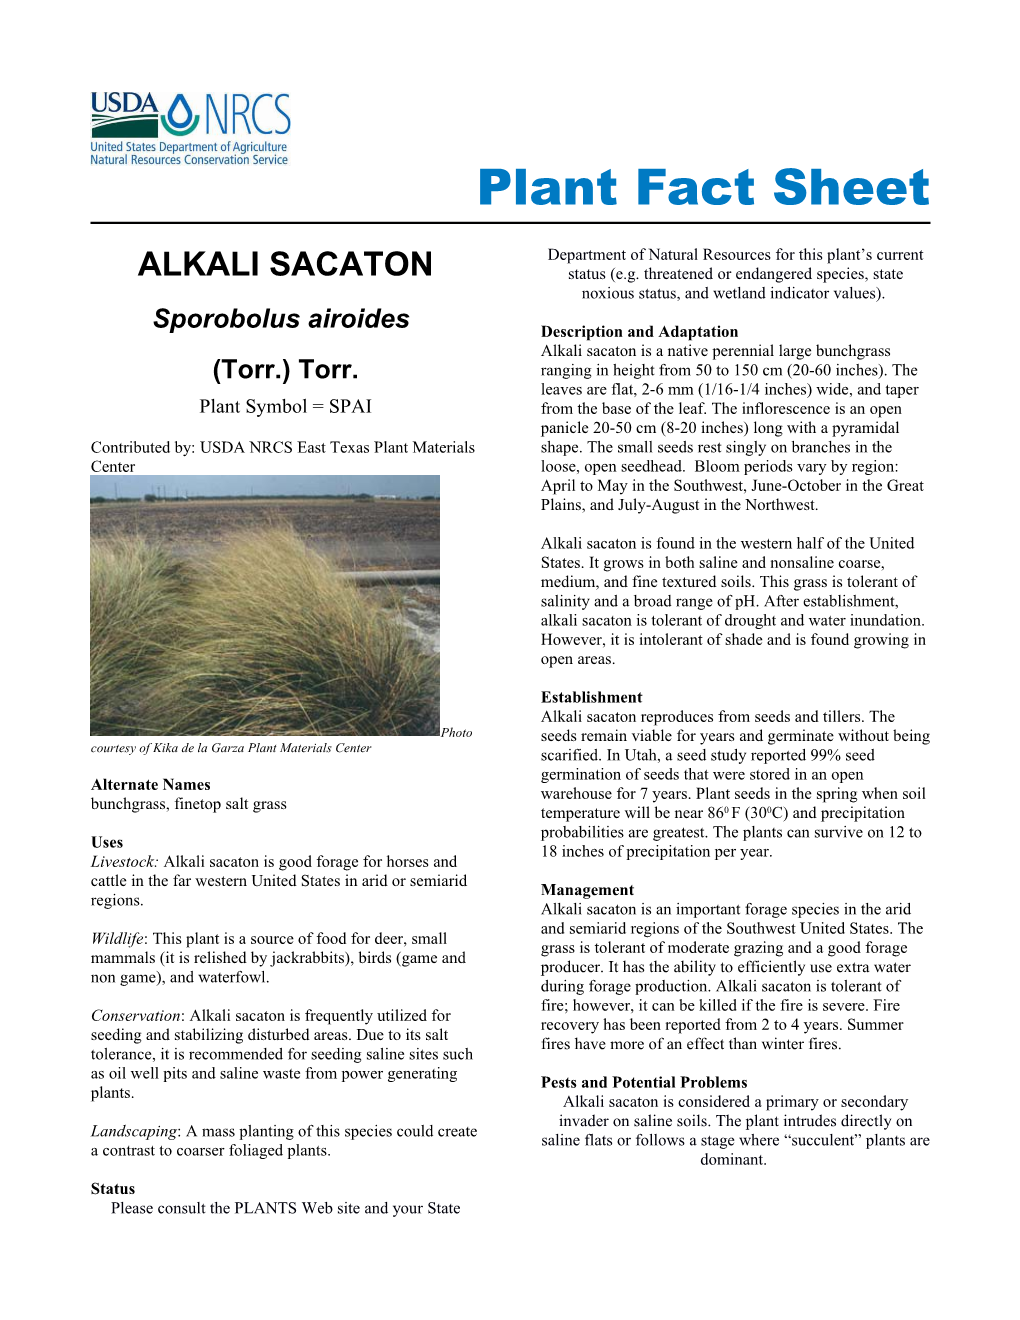 Alkali Sacaton Plant Fact Sheet